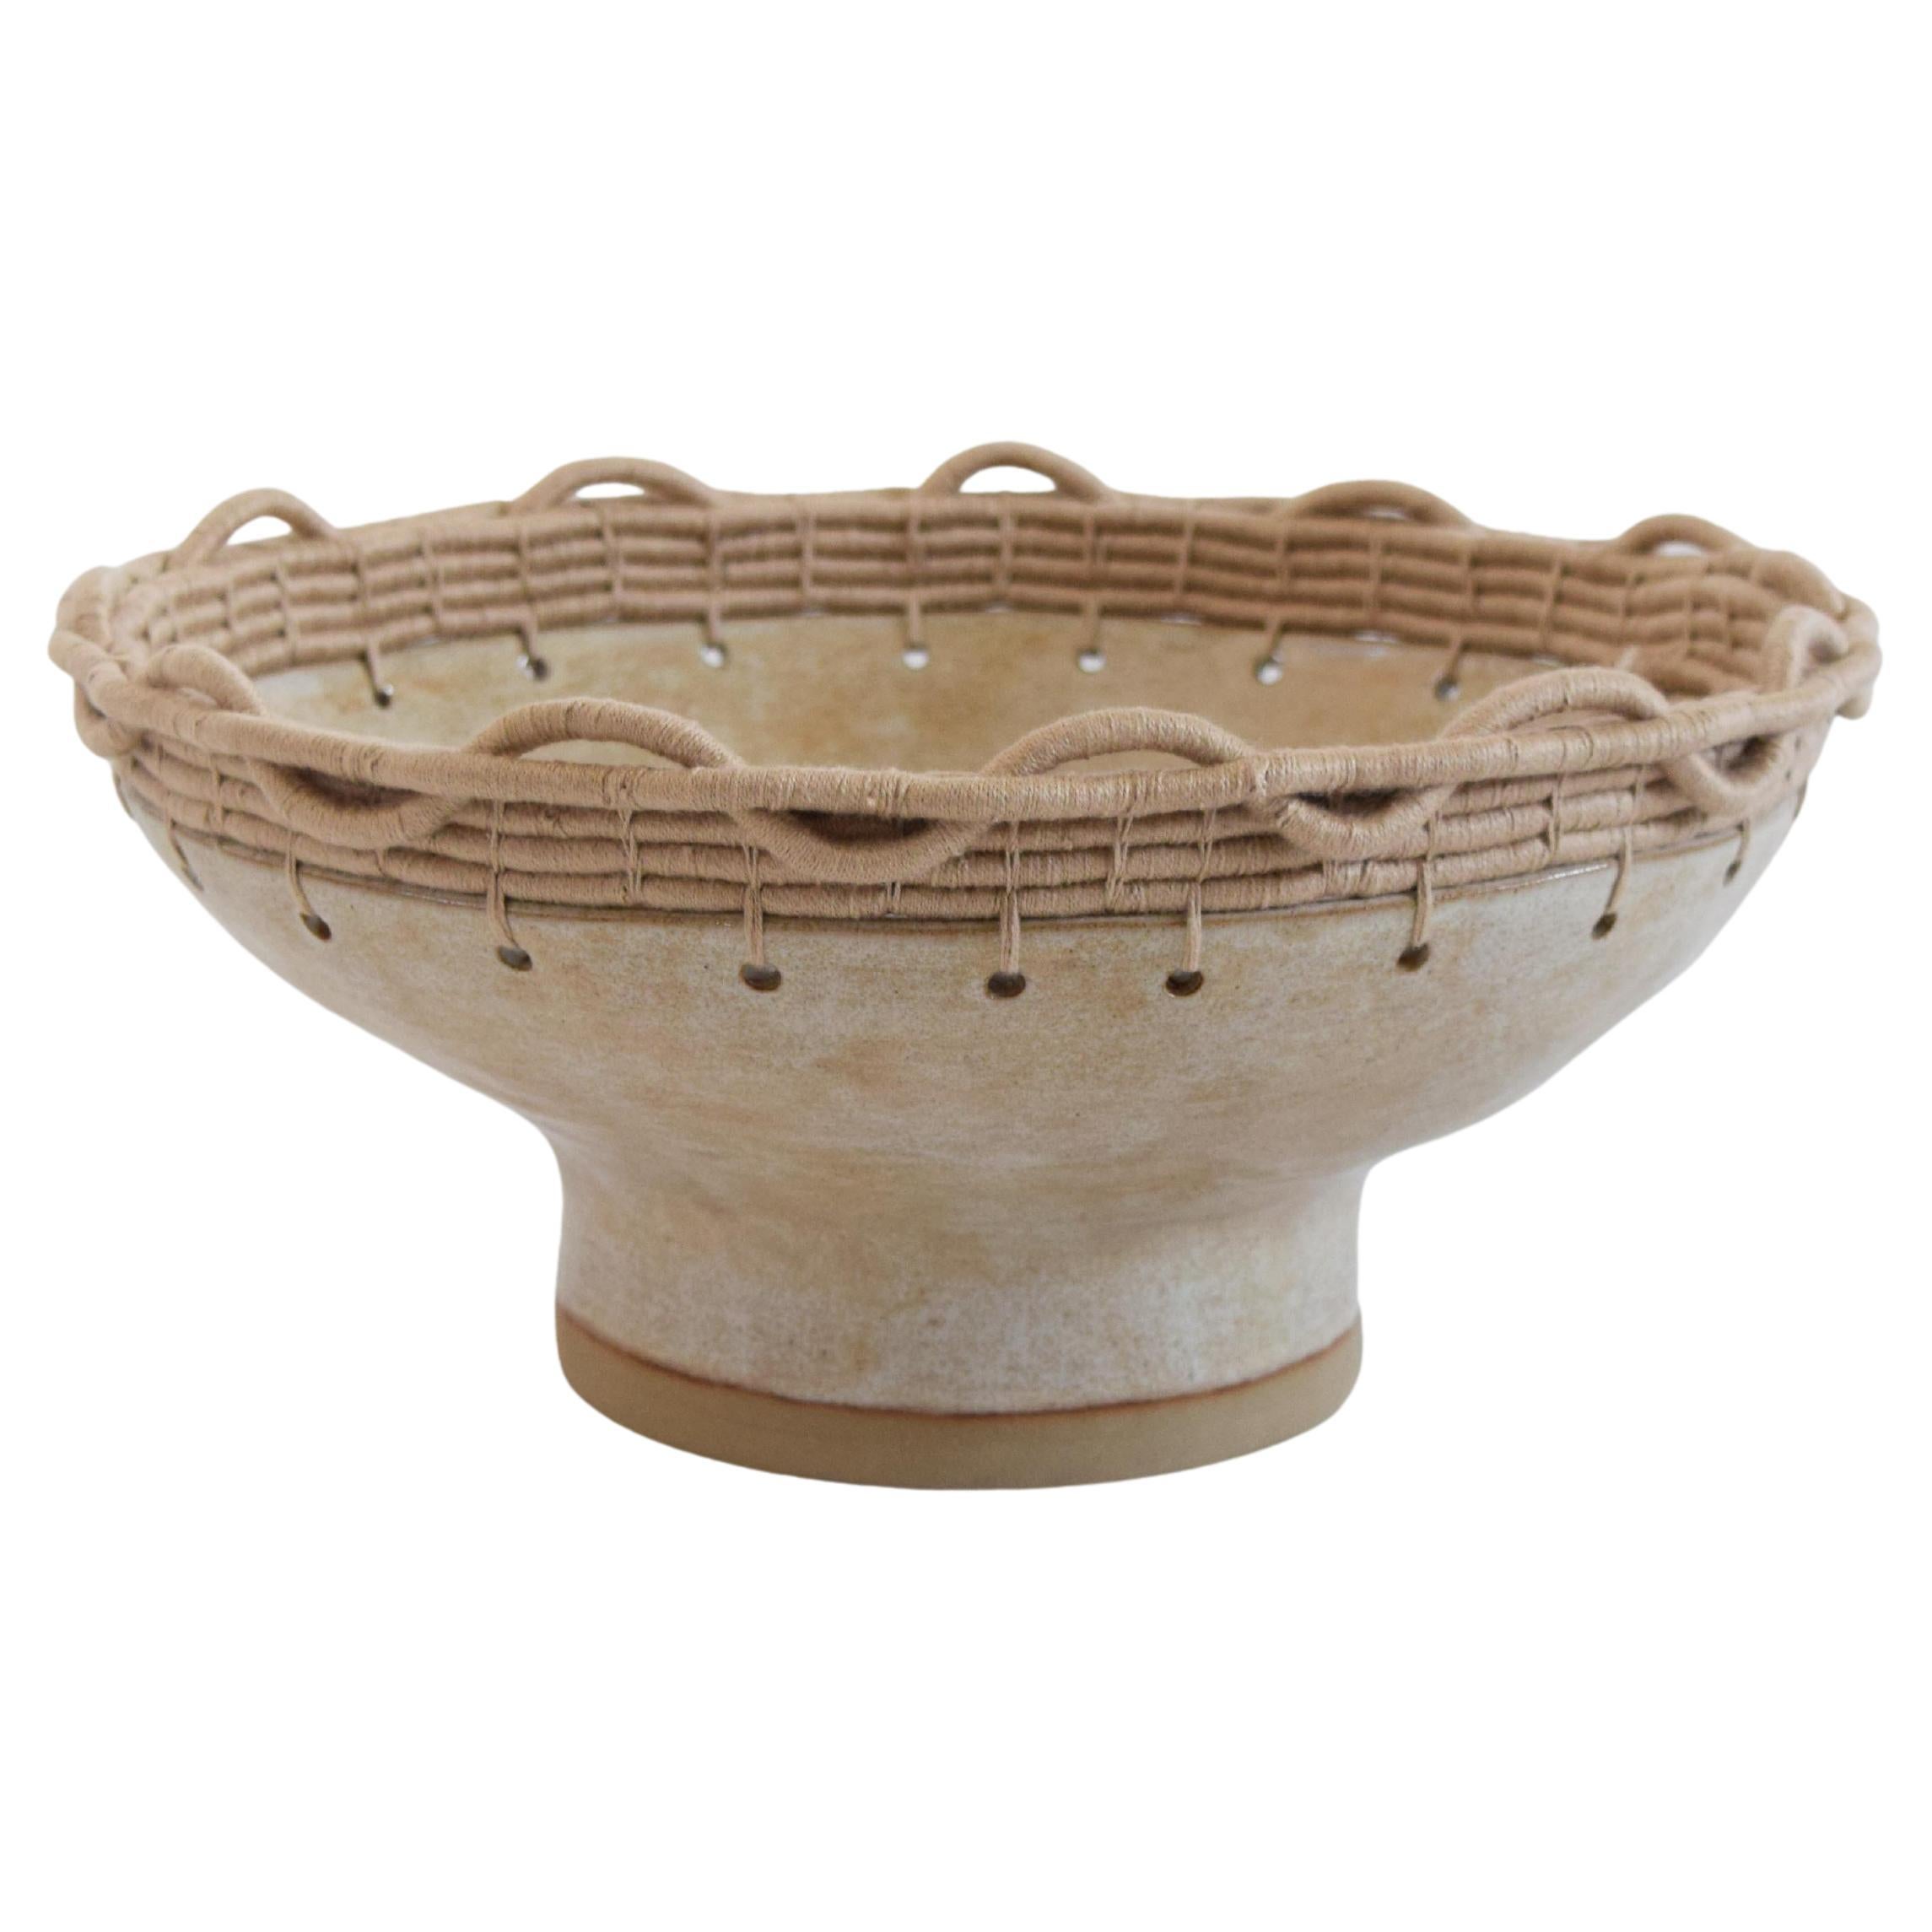 One of a Kind Handmade Ceramic Bowl #792, Light Tan Glaze & Woven Cotton Upper